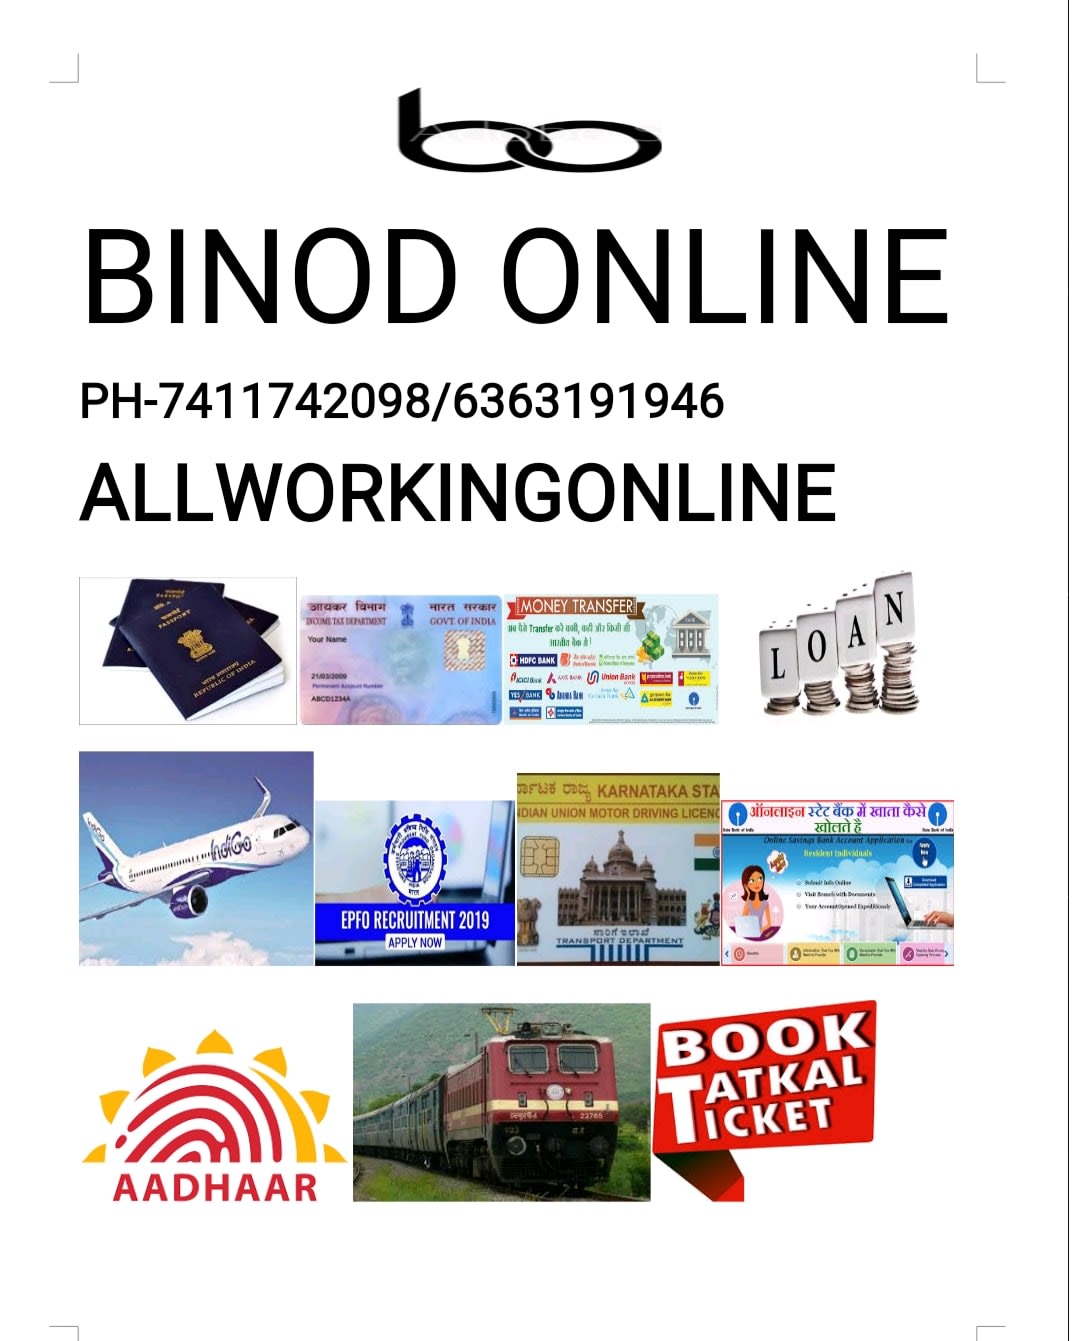 Binod Online